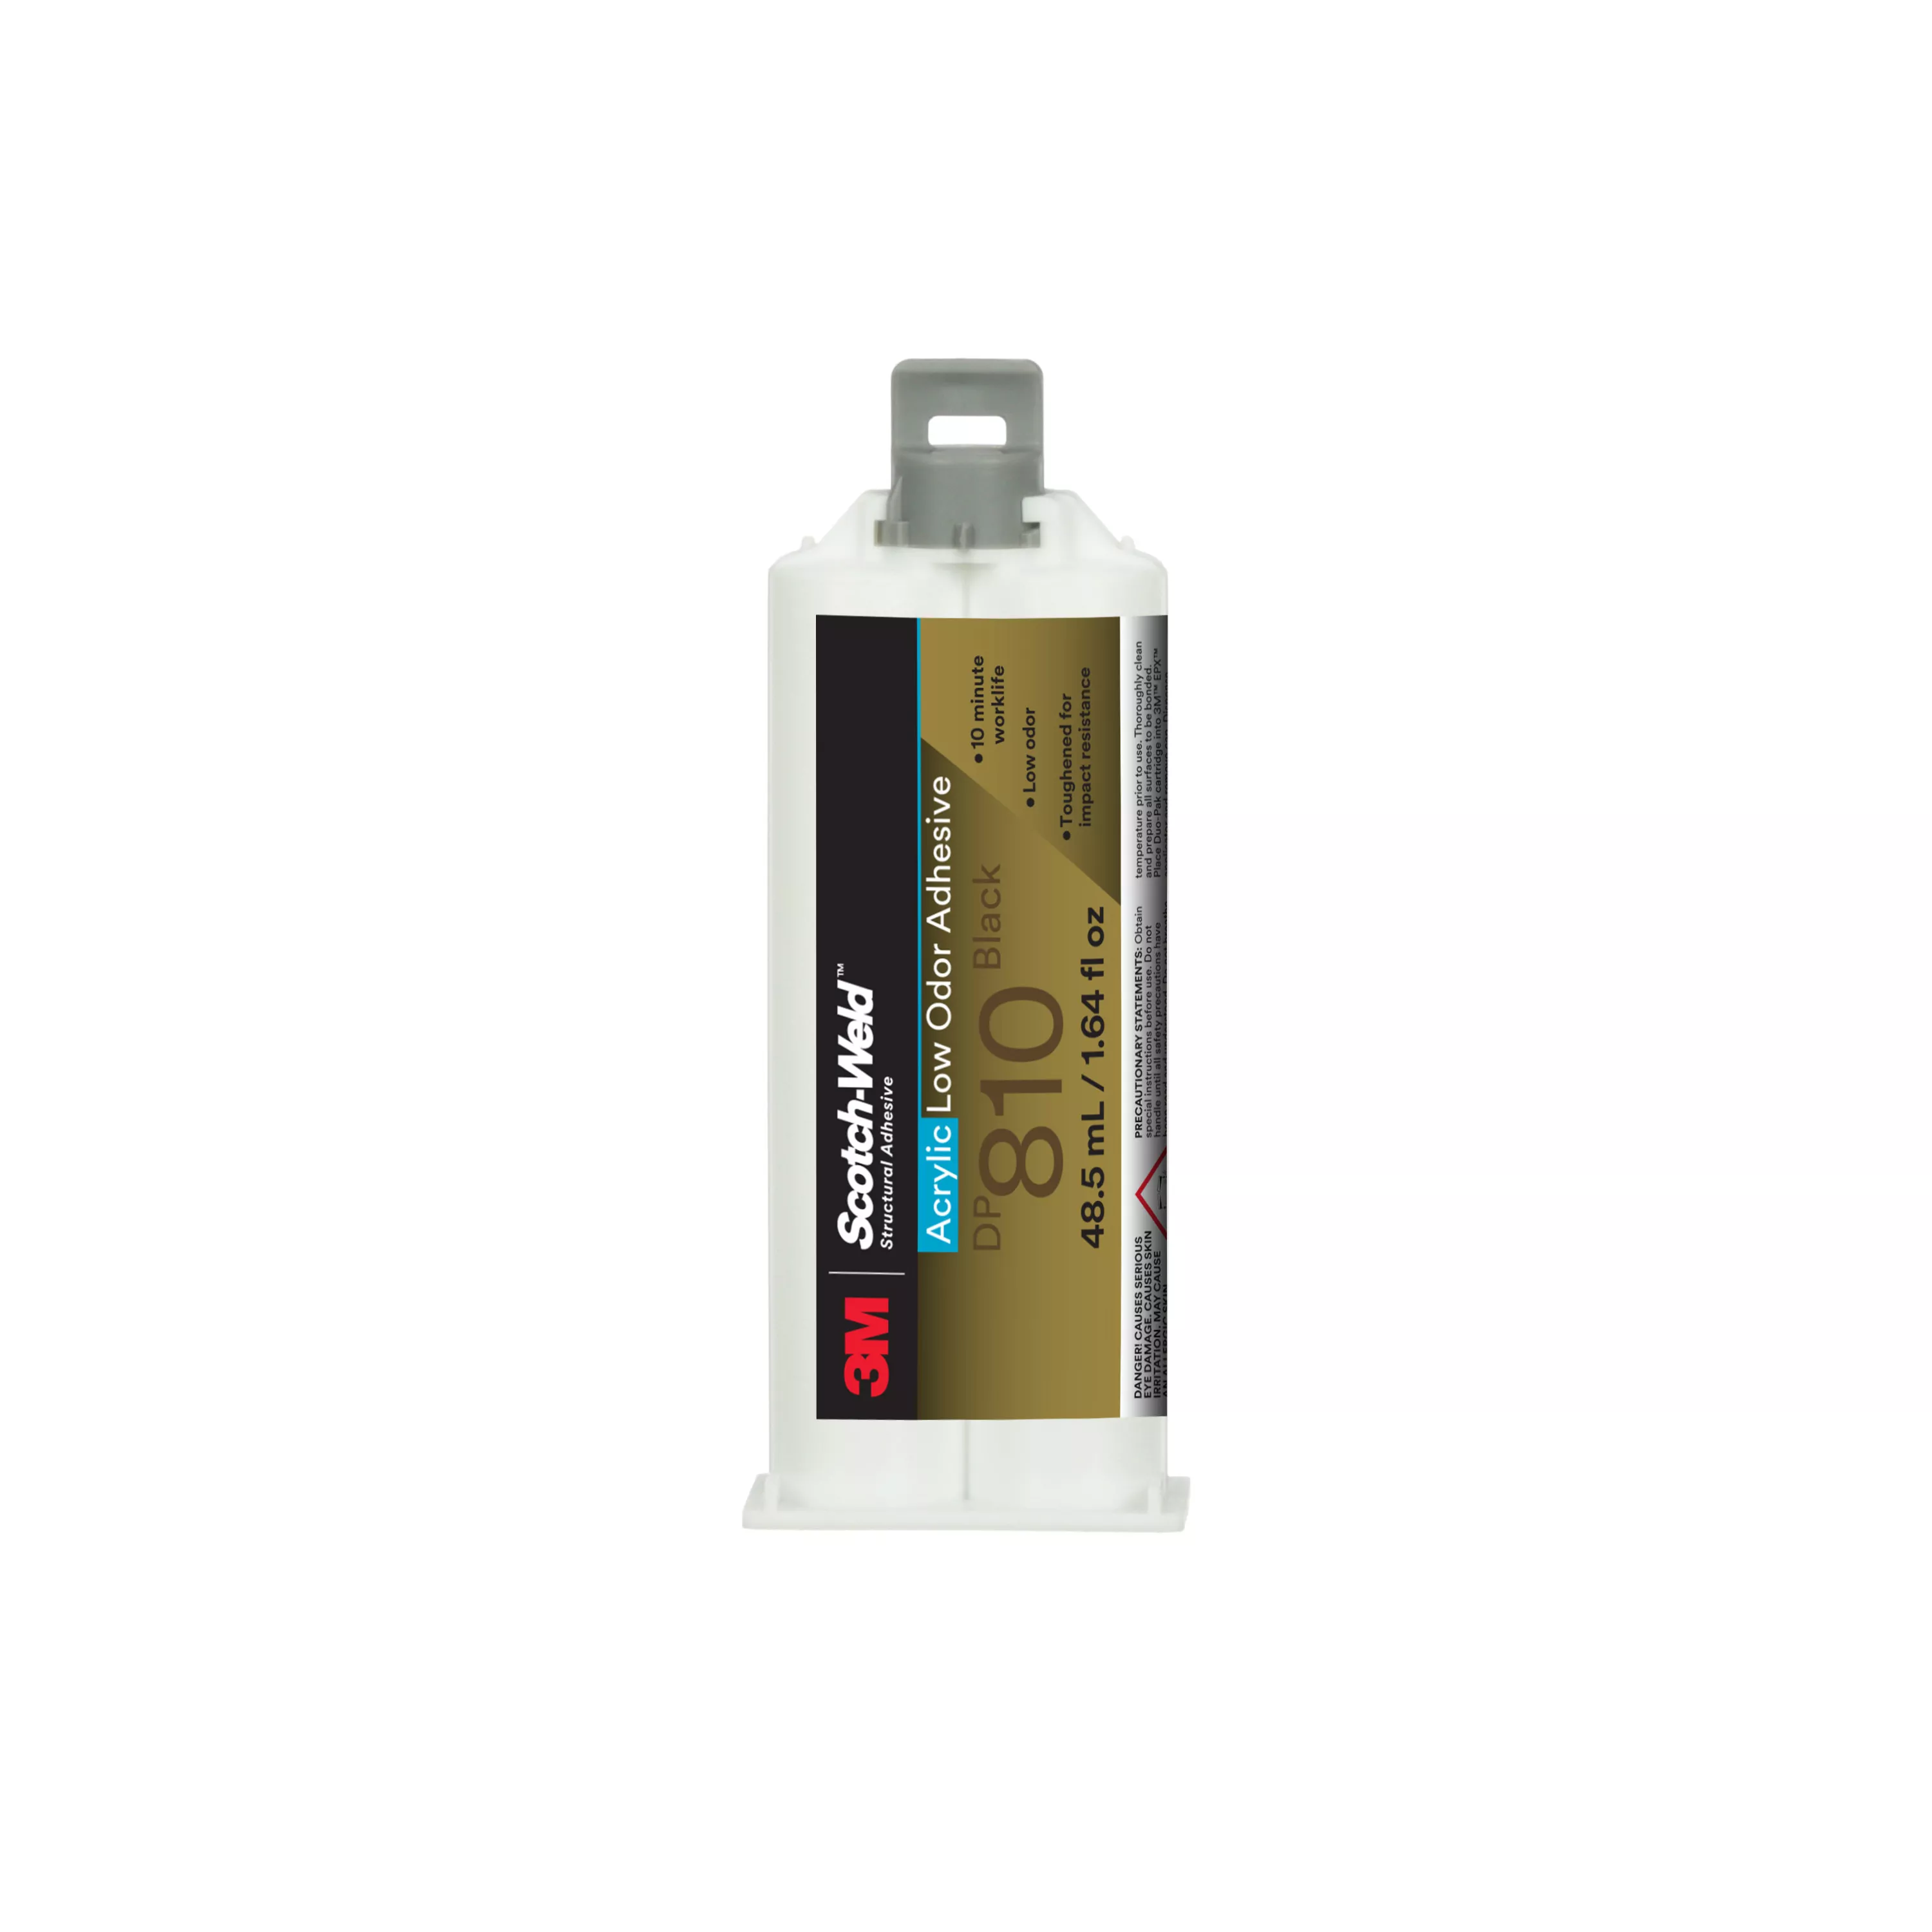 3M™ Scotch-Weld™ Low Odor Acrylic Adhesive DP810, Black, 48.5 mL
Duo-Pak, 12/Case